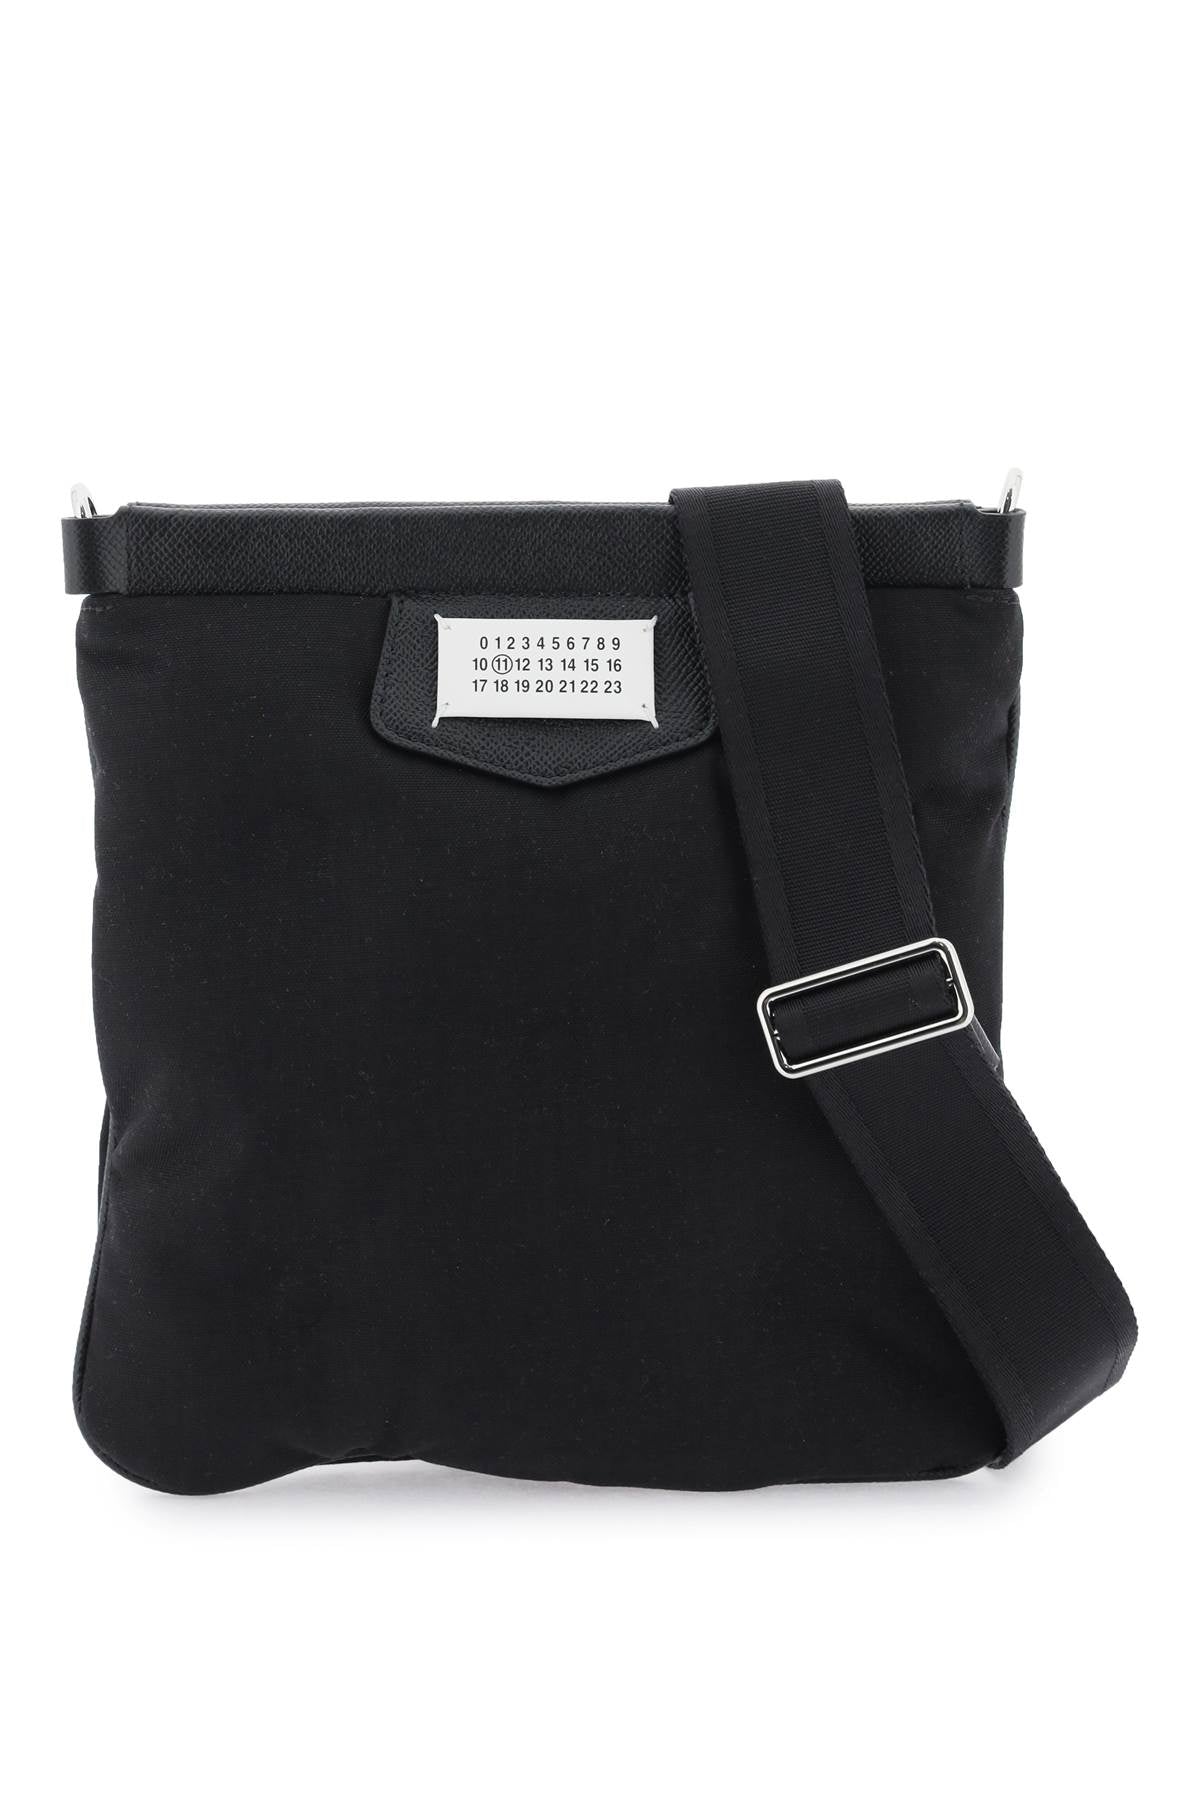 Maison Margiela Versatile Unisex Handbag In Black